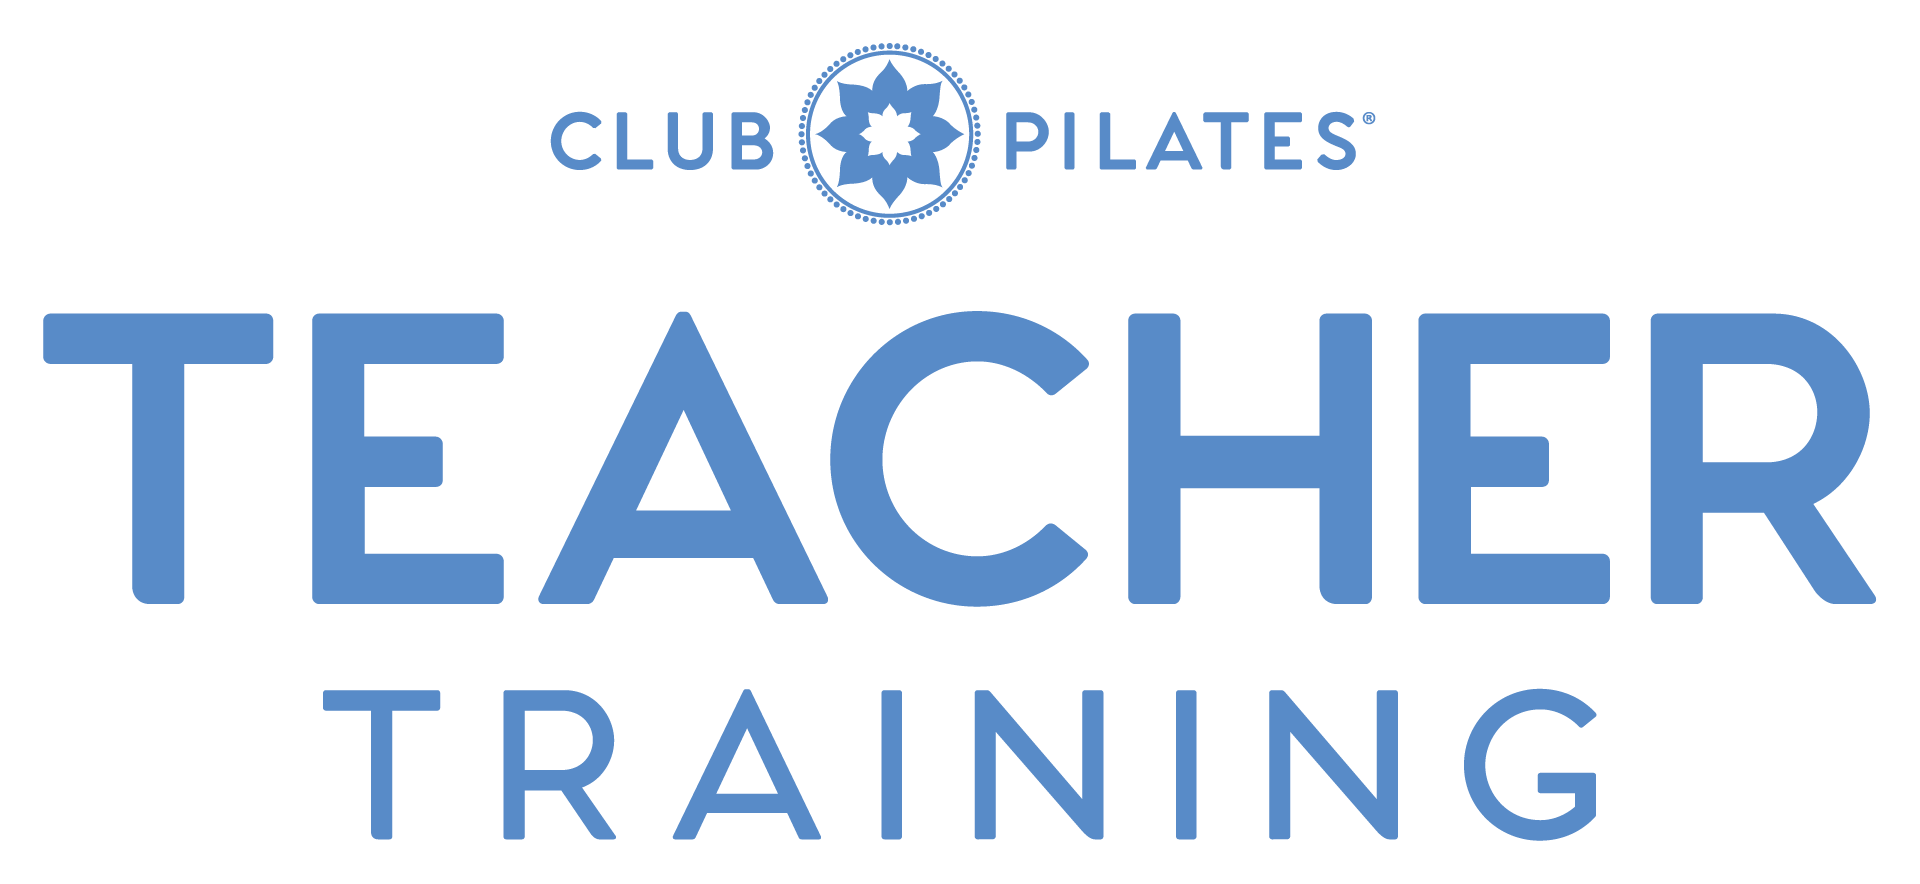 Club Pilates Teacher Training